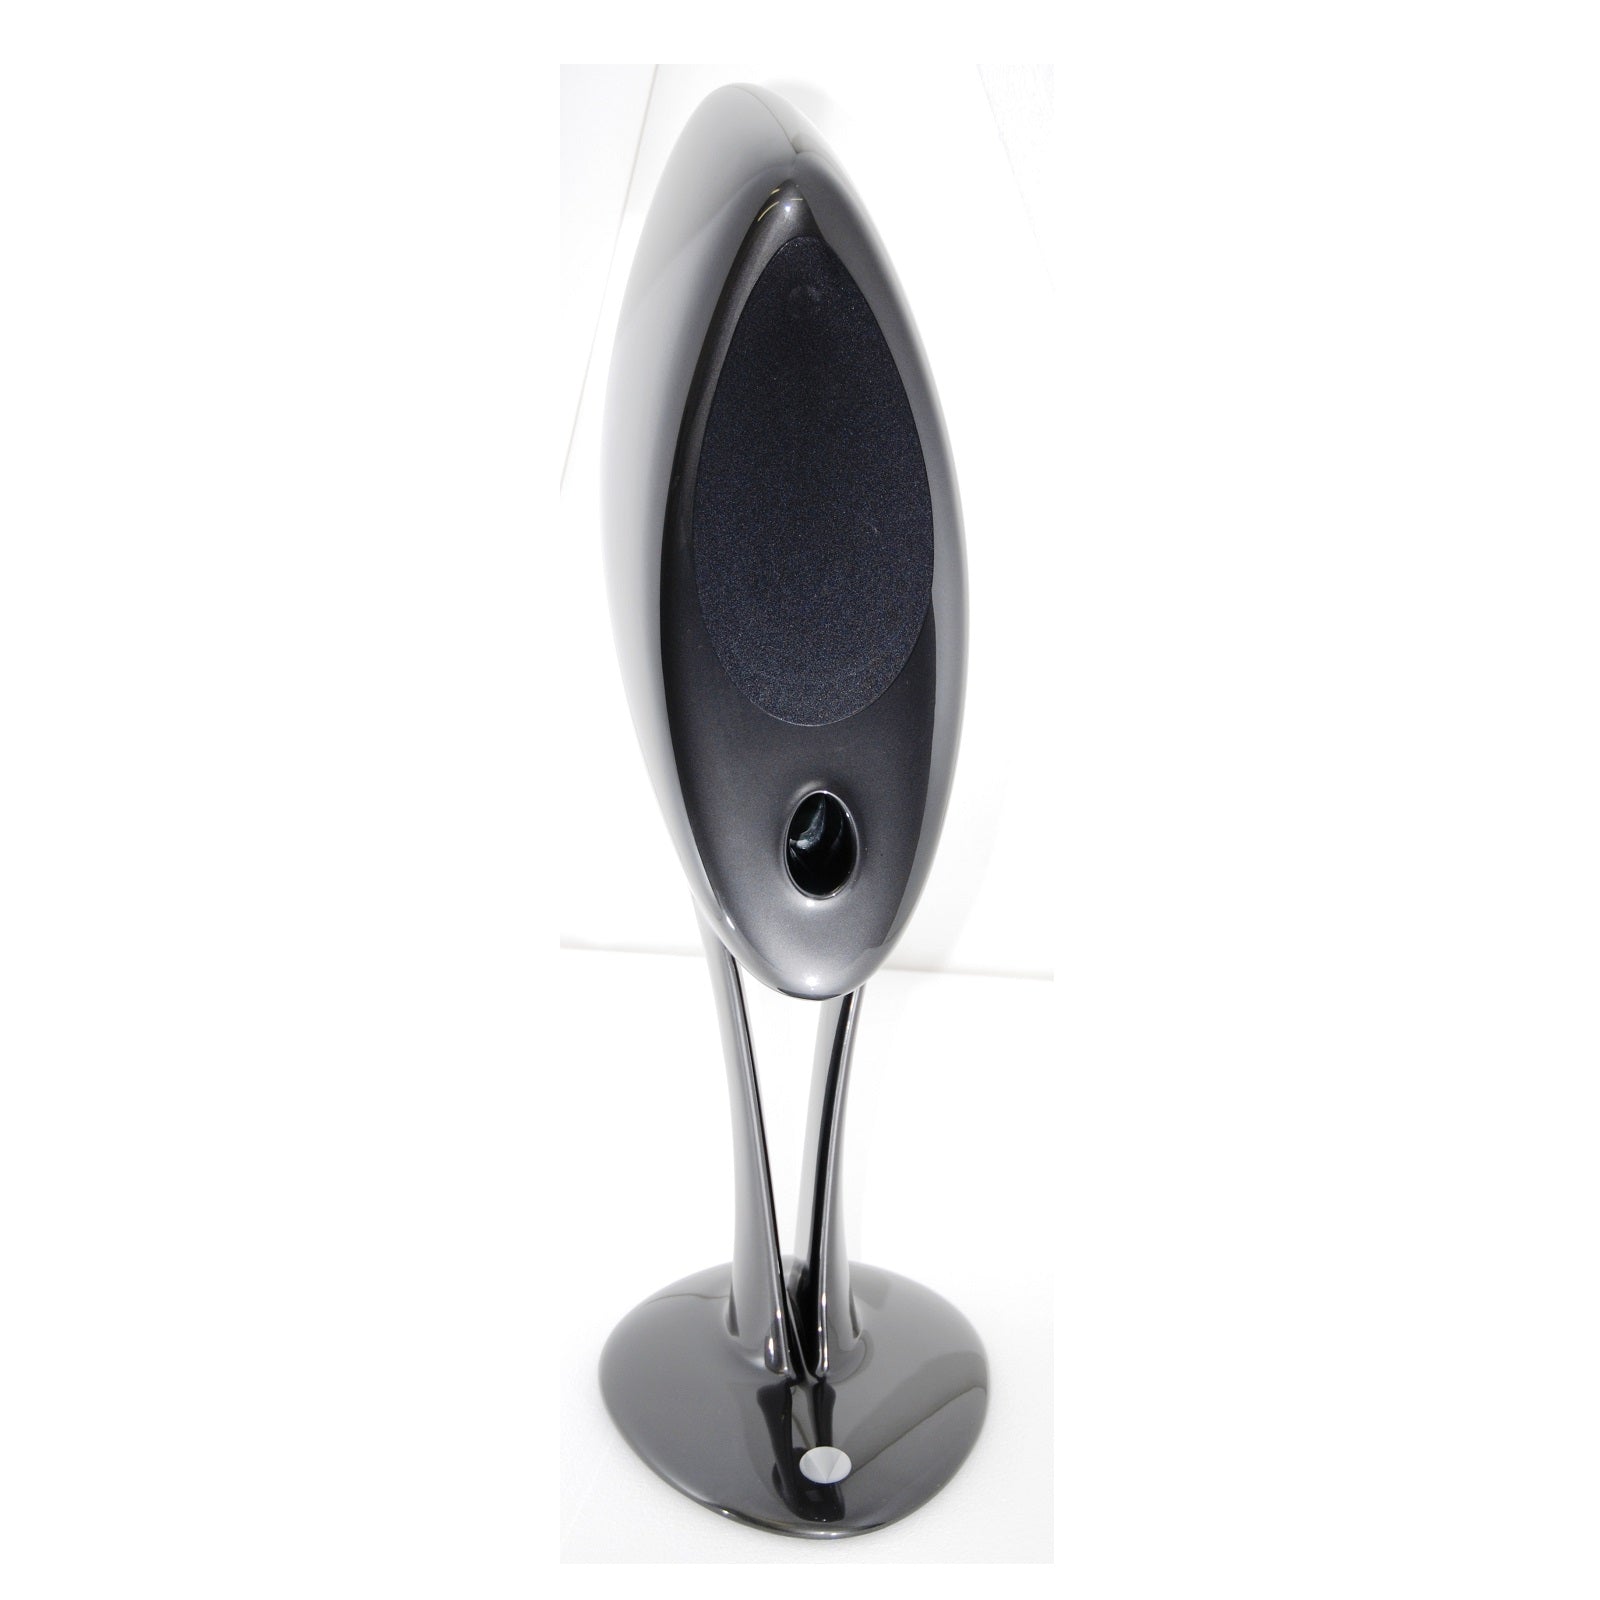 Vivid Audio Oval B1 Floorstanding Speakers (pair)